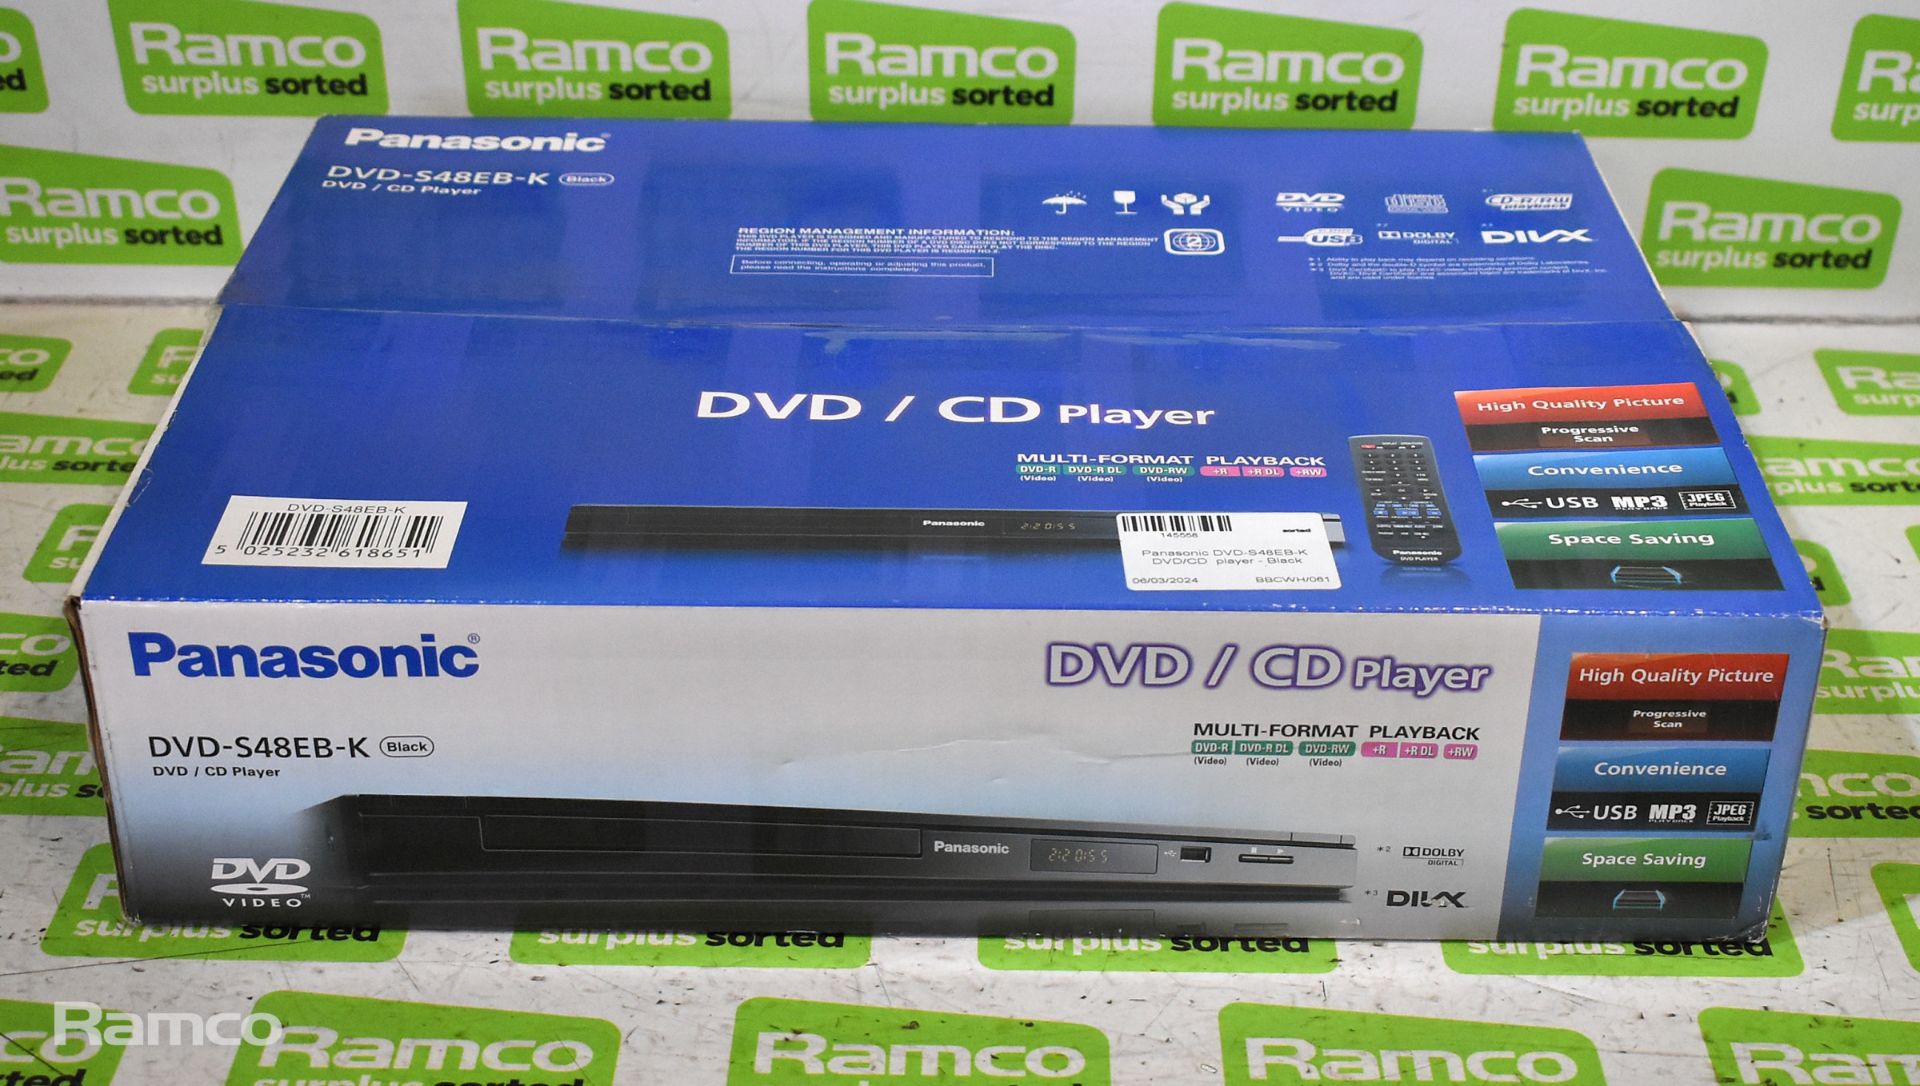 3x Panasonic DVD-S48EB-K DVD/CD players - Black - Image 5 of 6